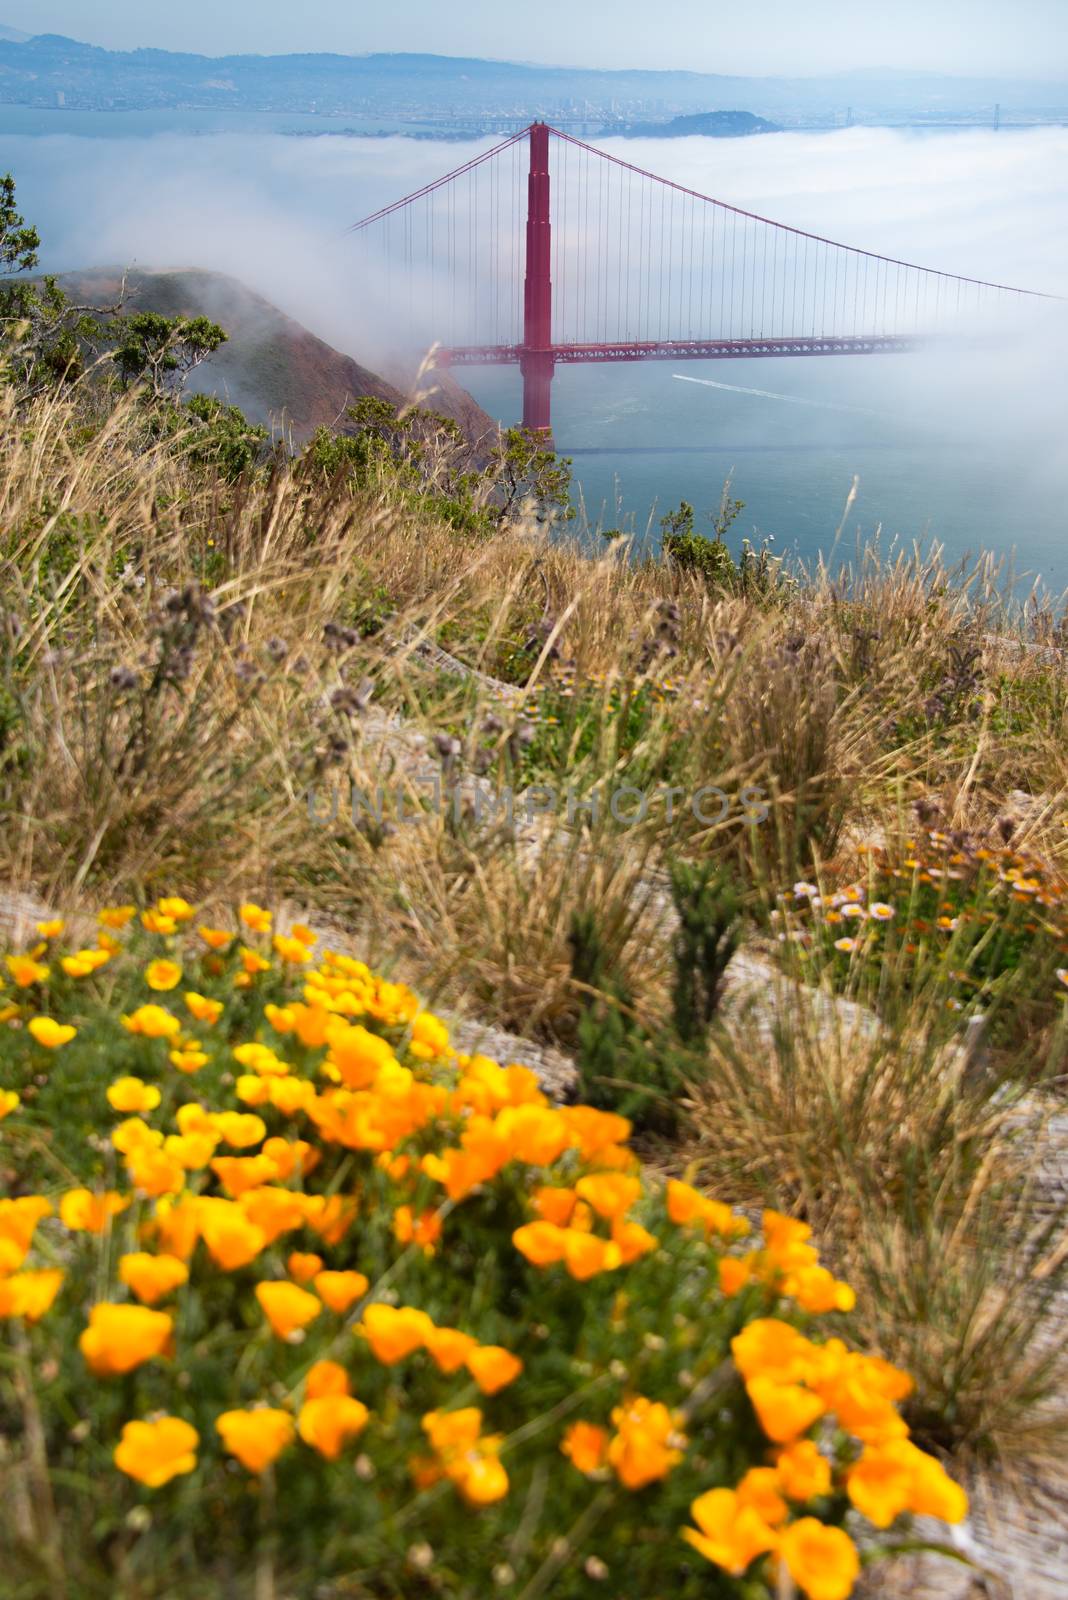 Flowers with Suspension bridge in the background, Golden Gate Bridge, San Francisco Bay, San Francisco, California, USA